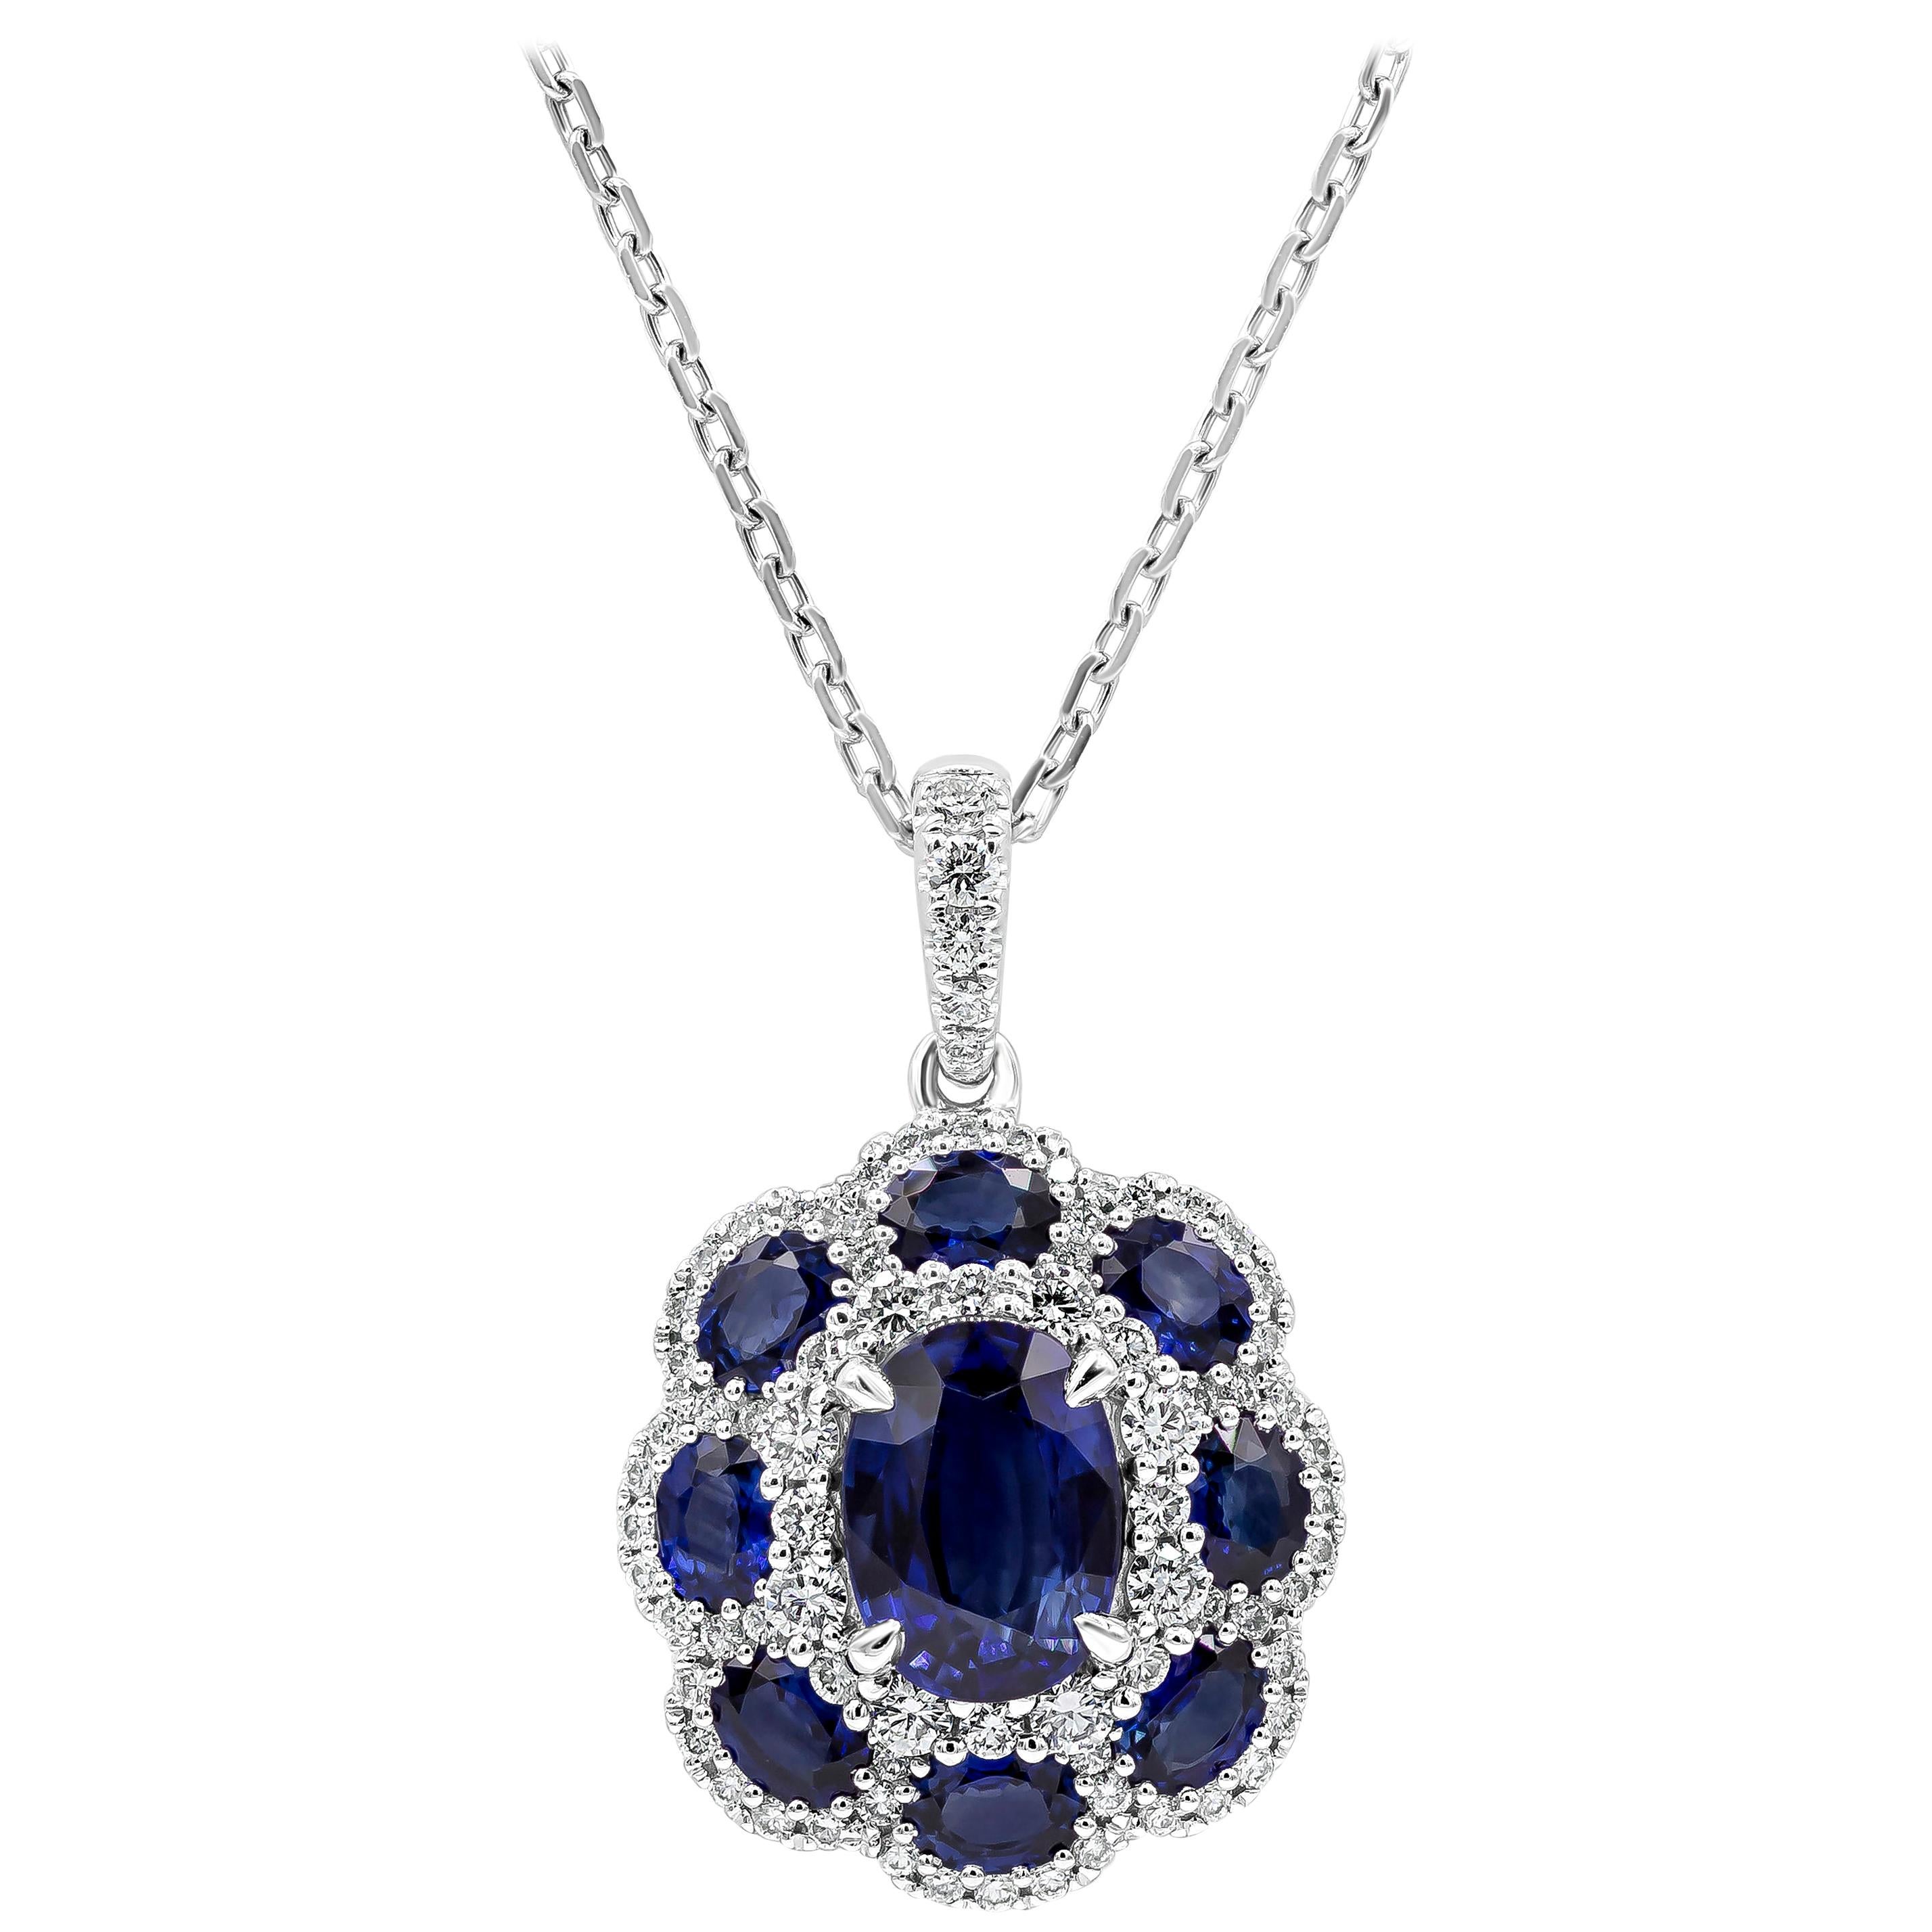 Roman Malakov 3.88 Carats Oval Cut Blue Sapphire and Diamond Pendant Necklace